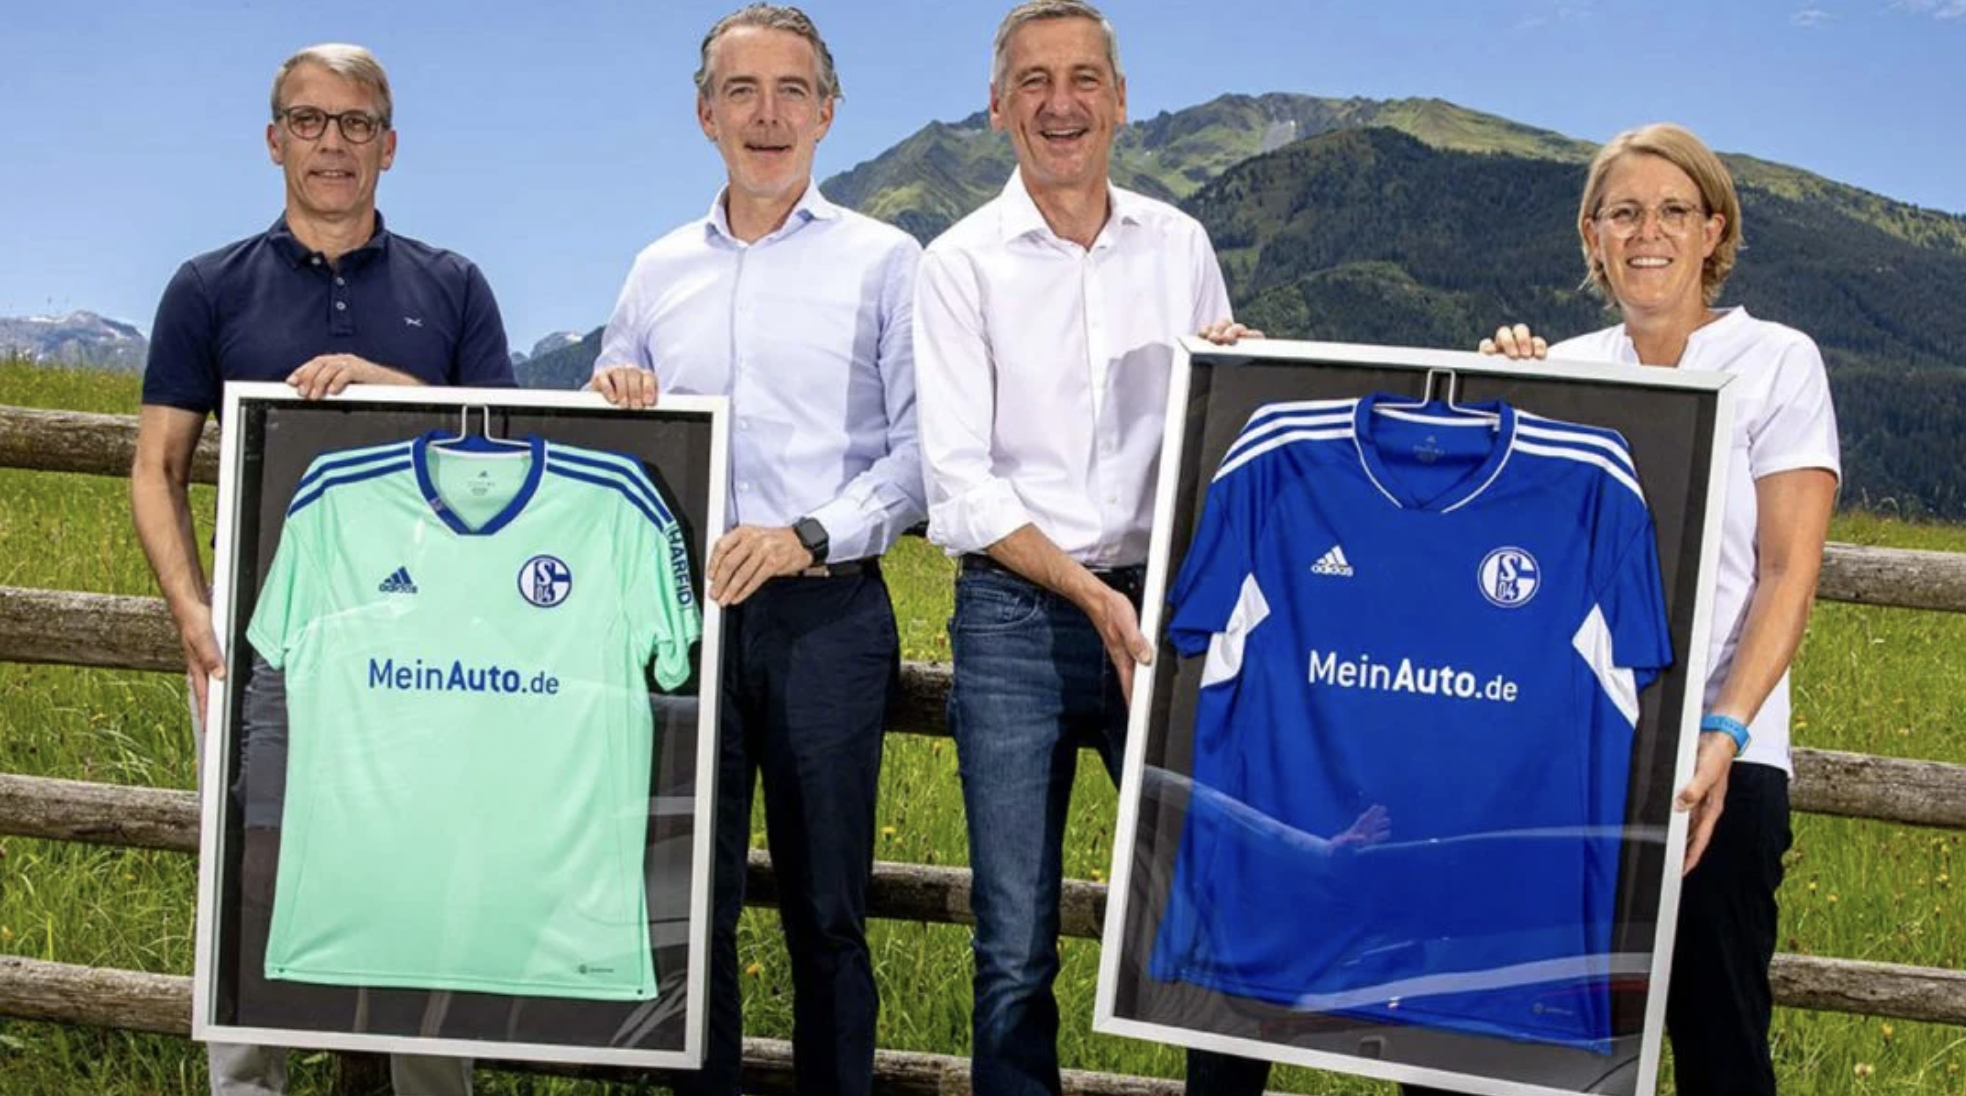 Schalke 04 refuel with 3-year MeinAuto.de shirt deal after Gazprom removal 